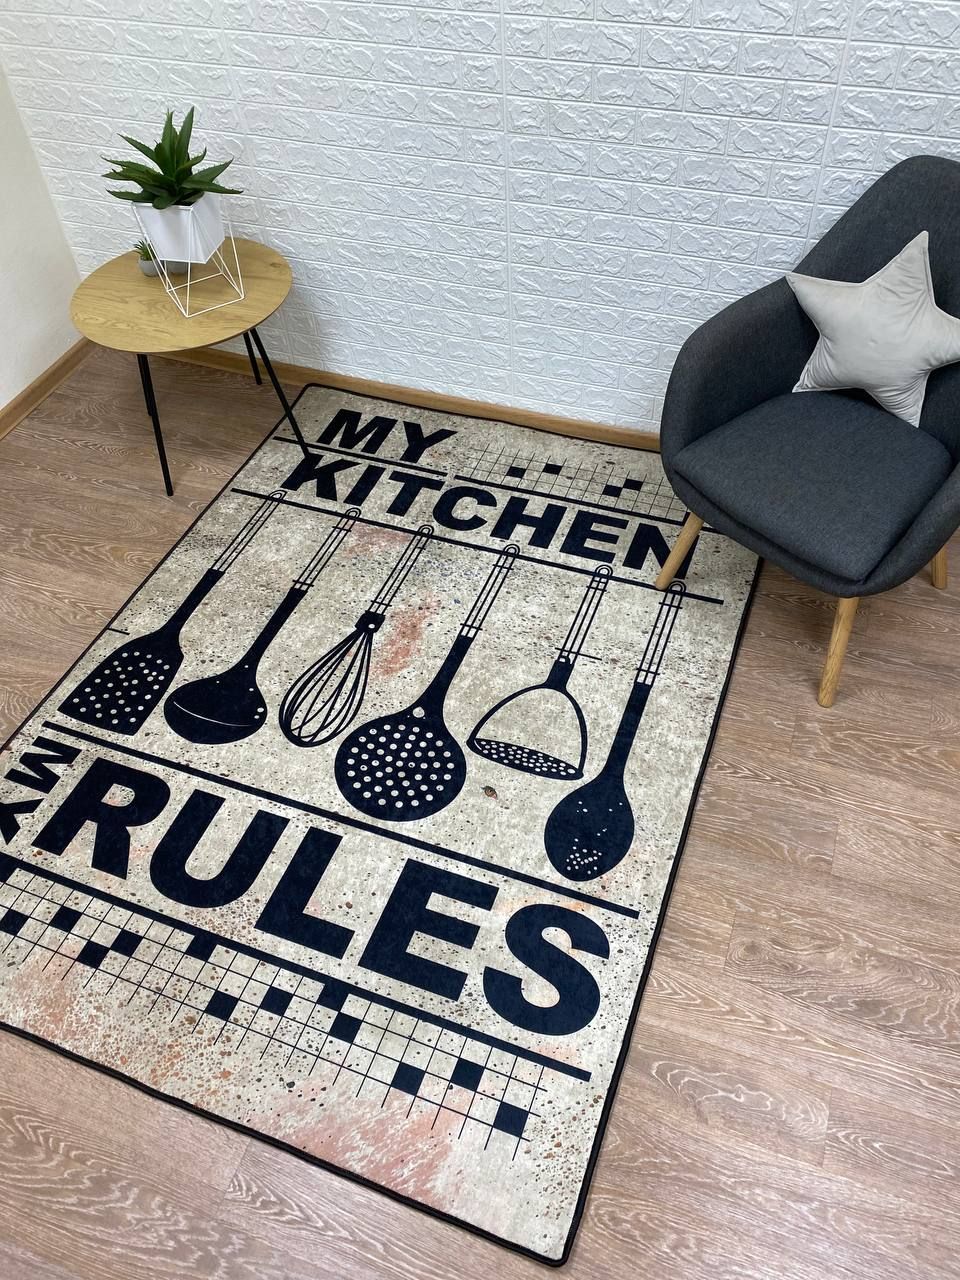 Коврик для кухни "My kitchen My Rules"